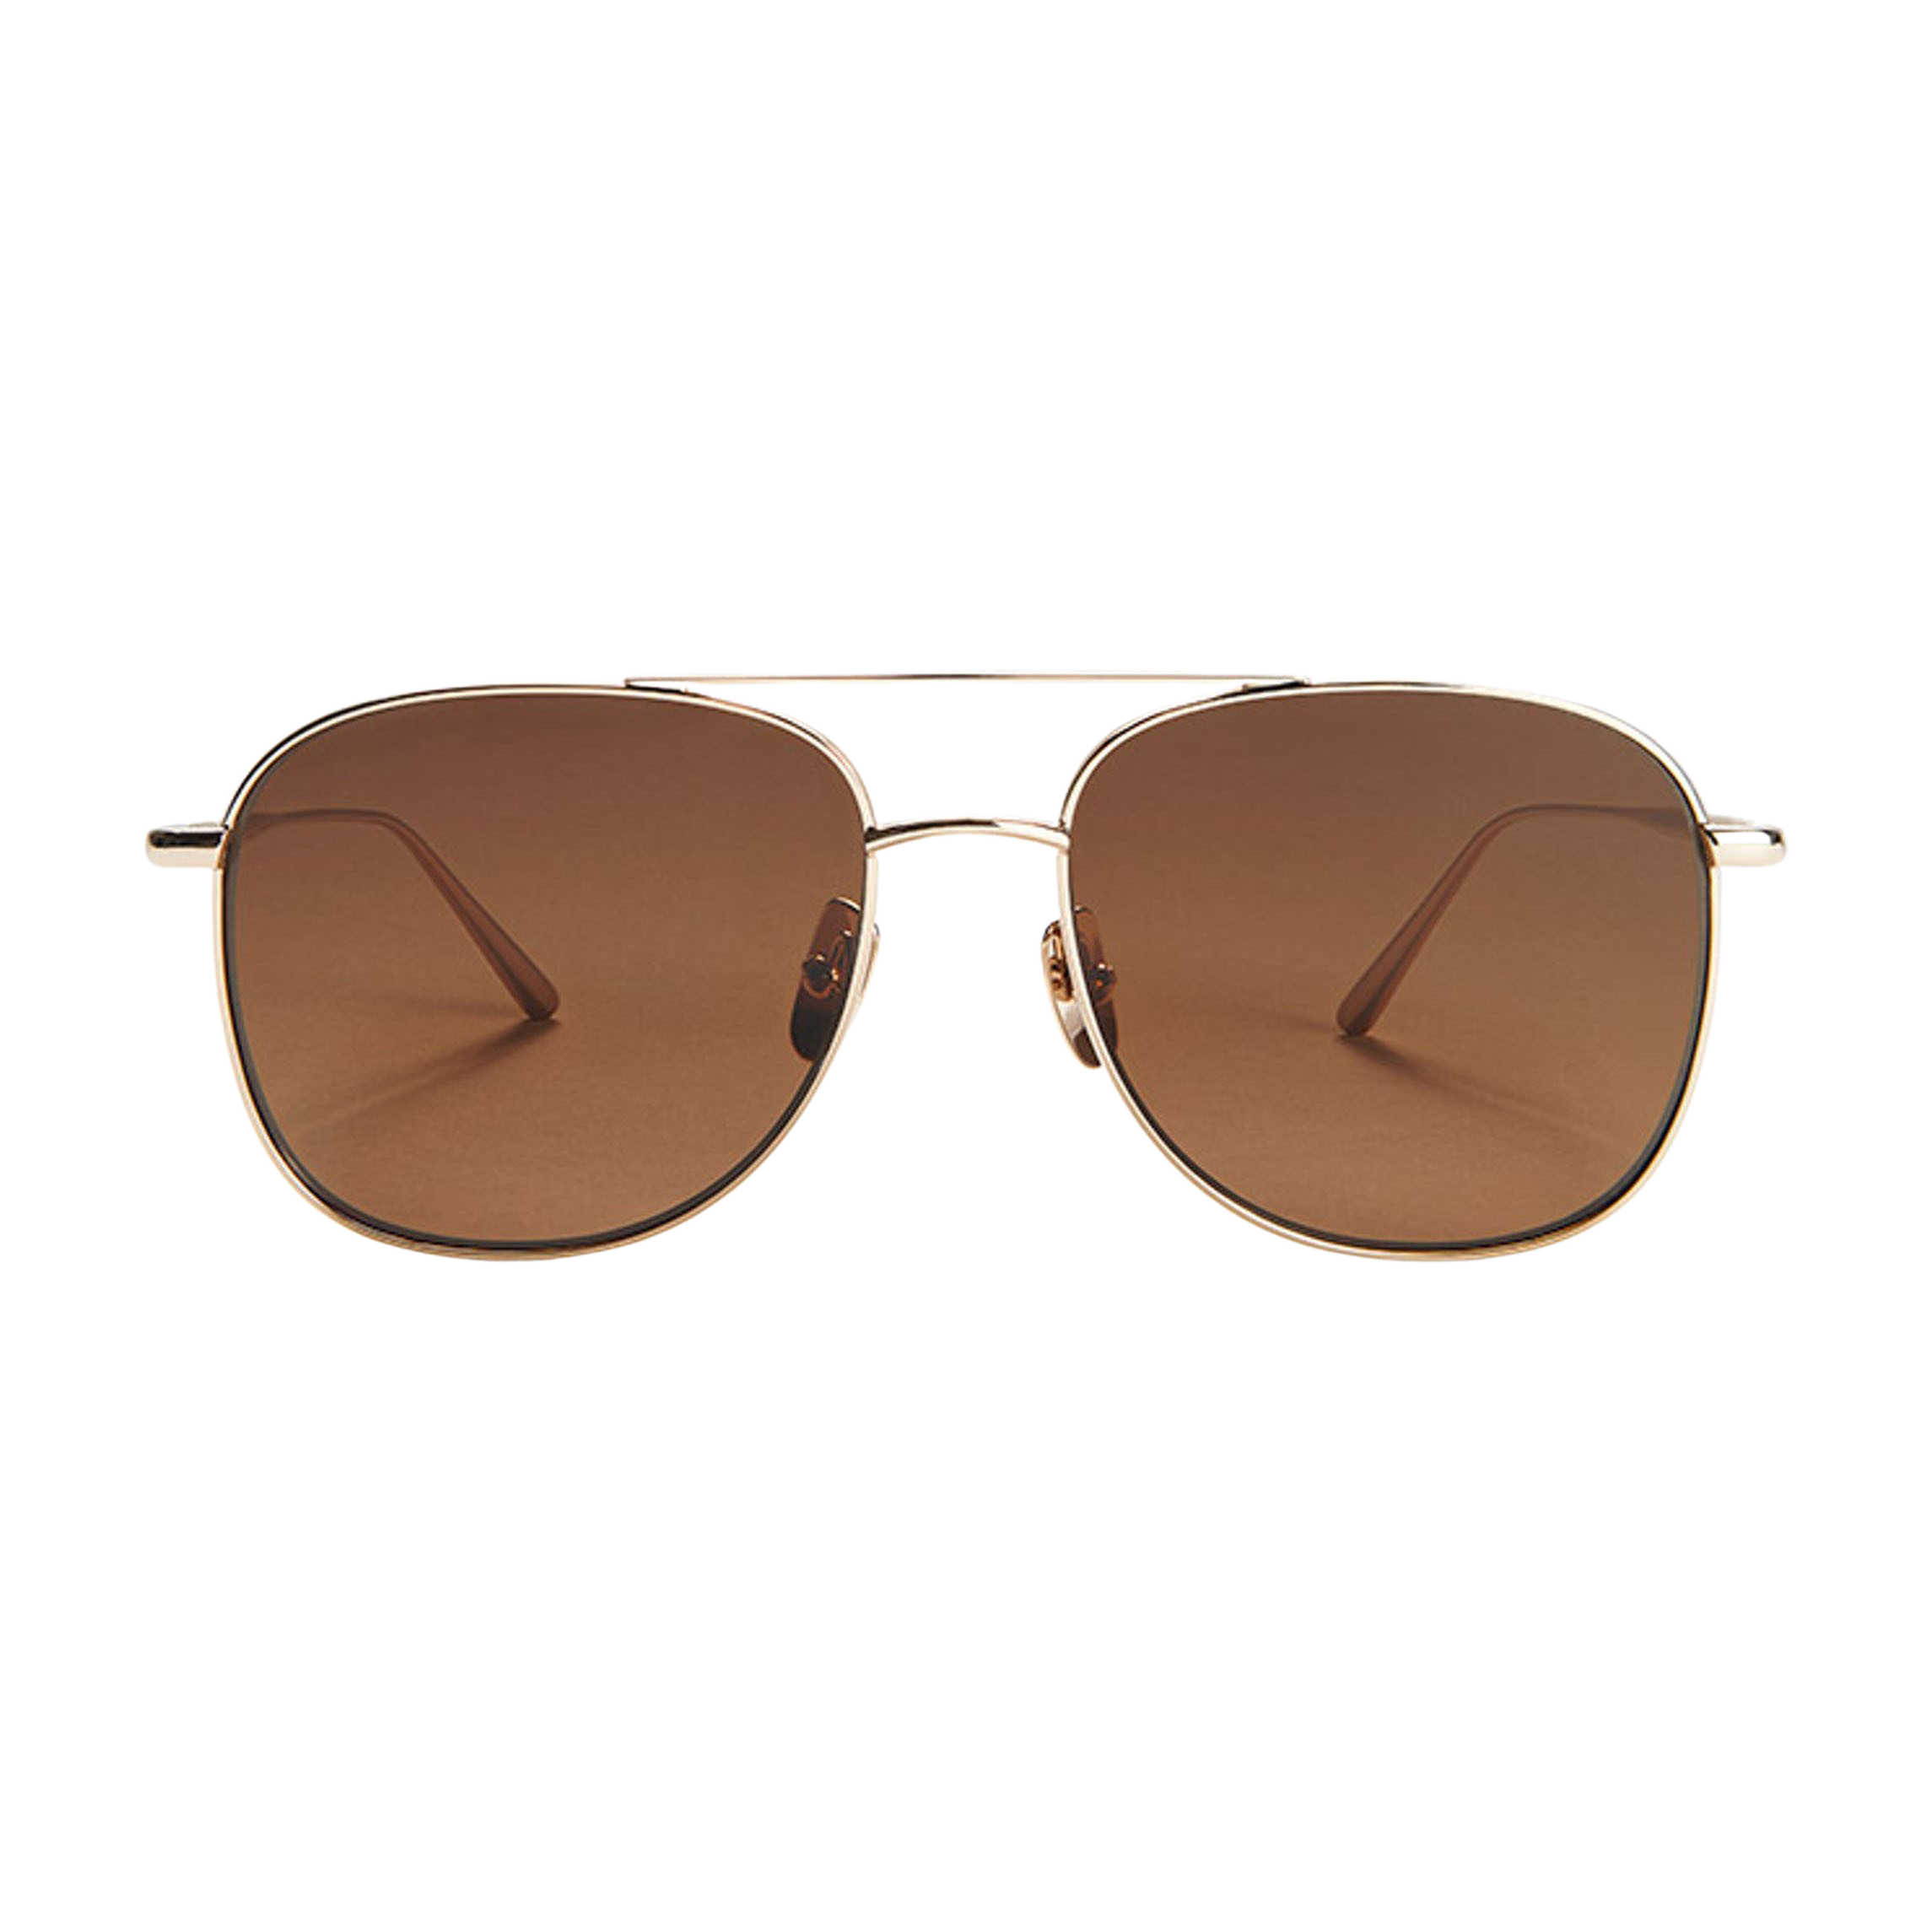 Chimi Eyewear Steel Pilot Brown Lenses Sunglasses 55mm Front